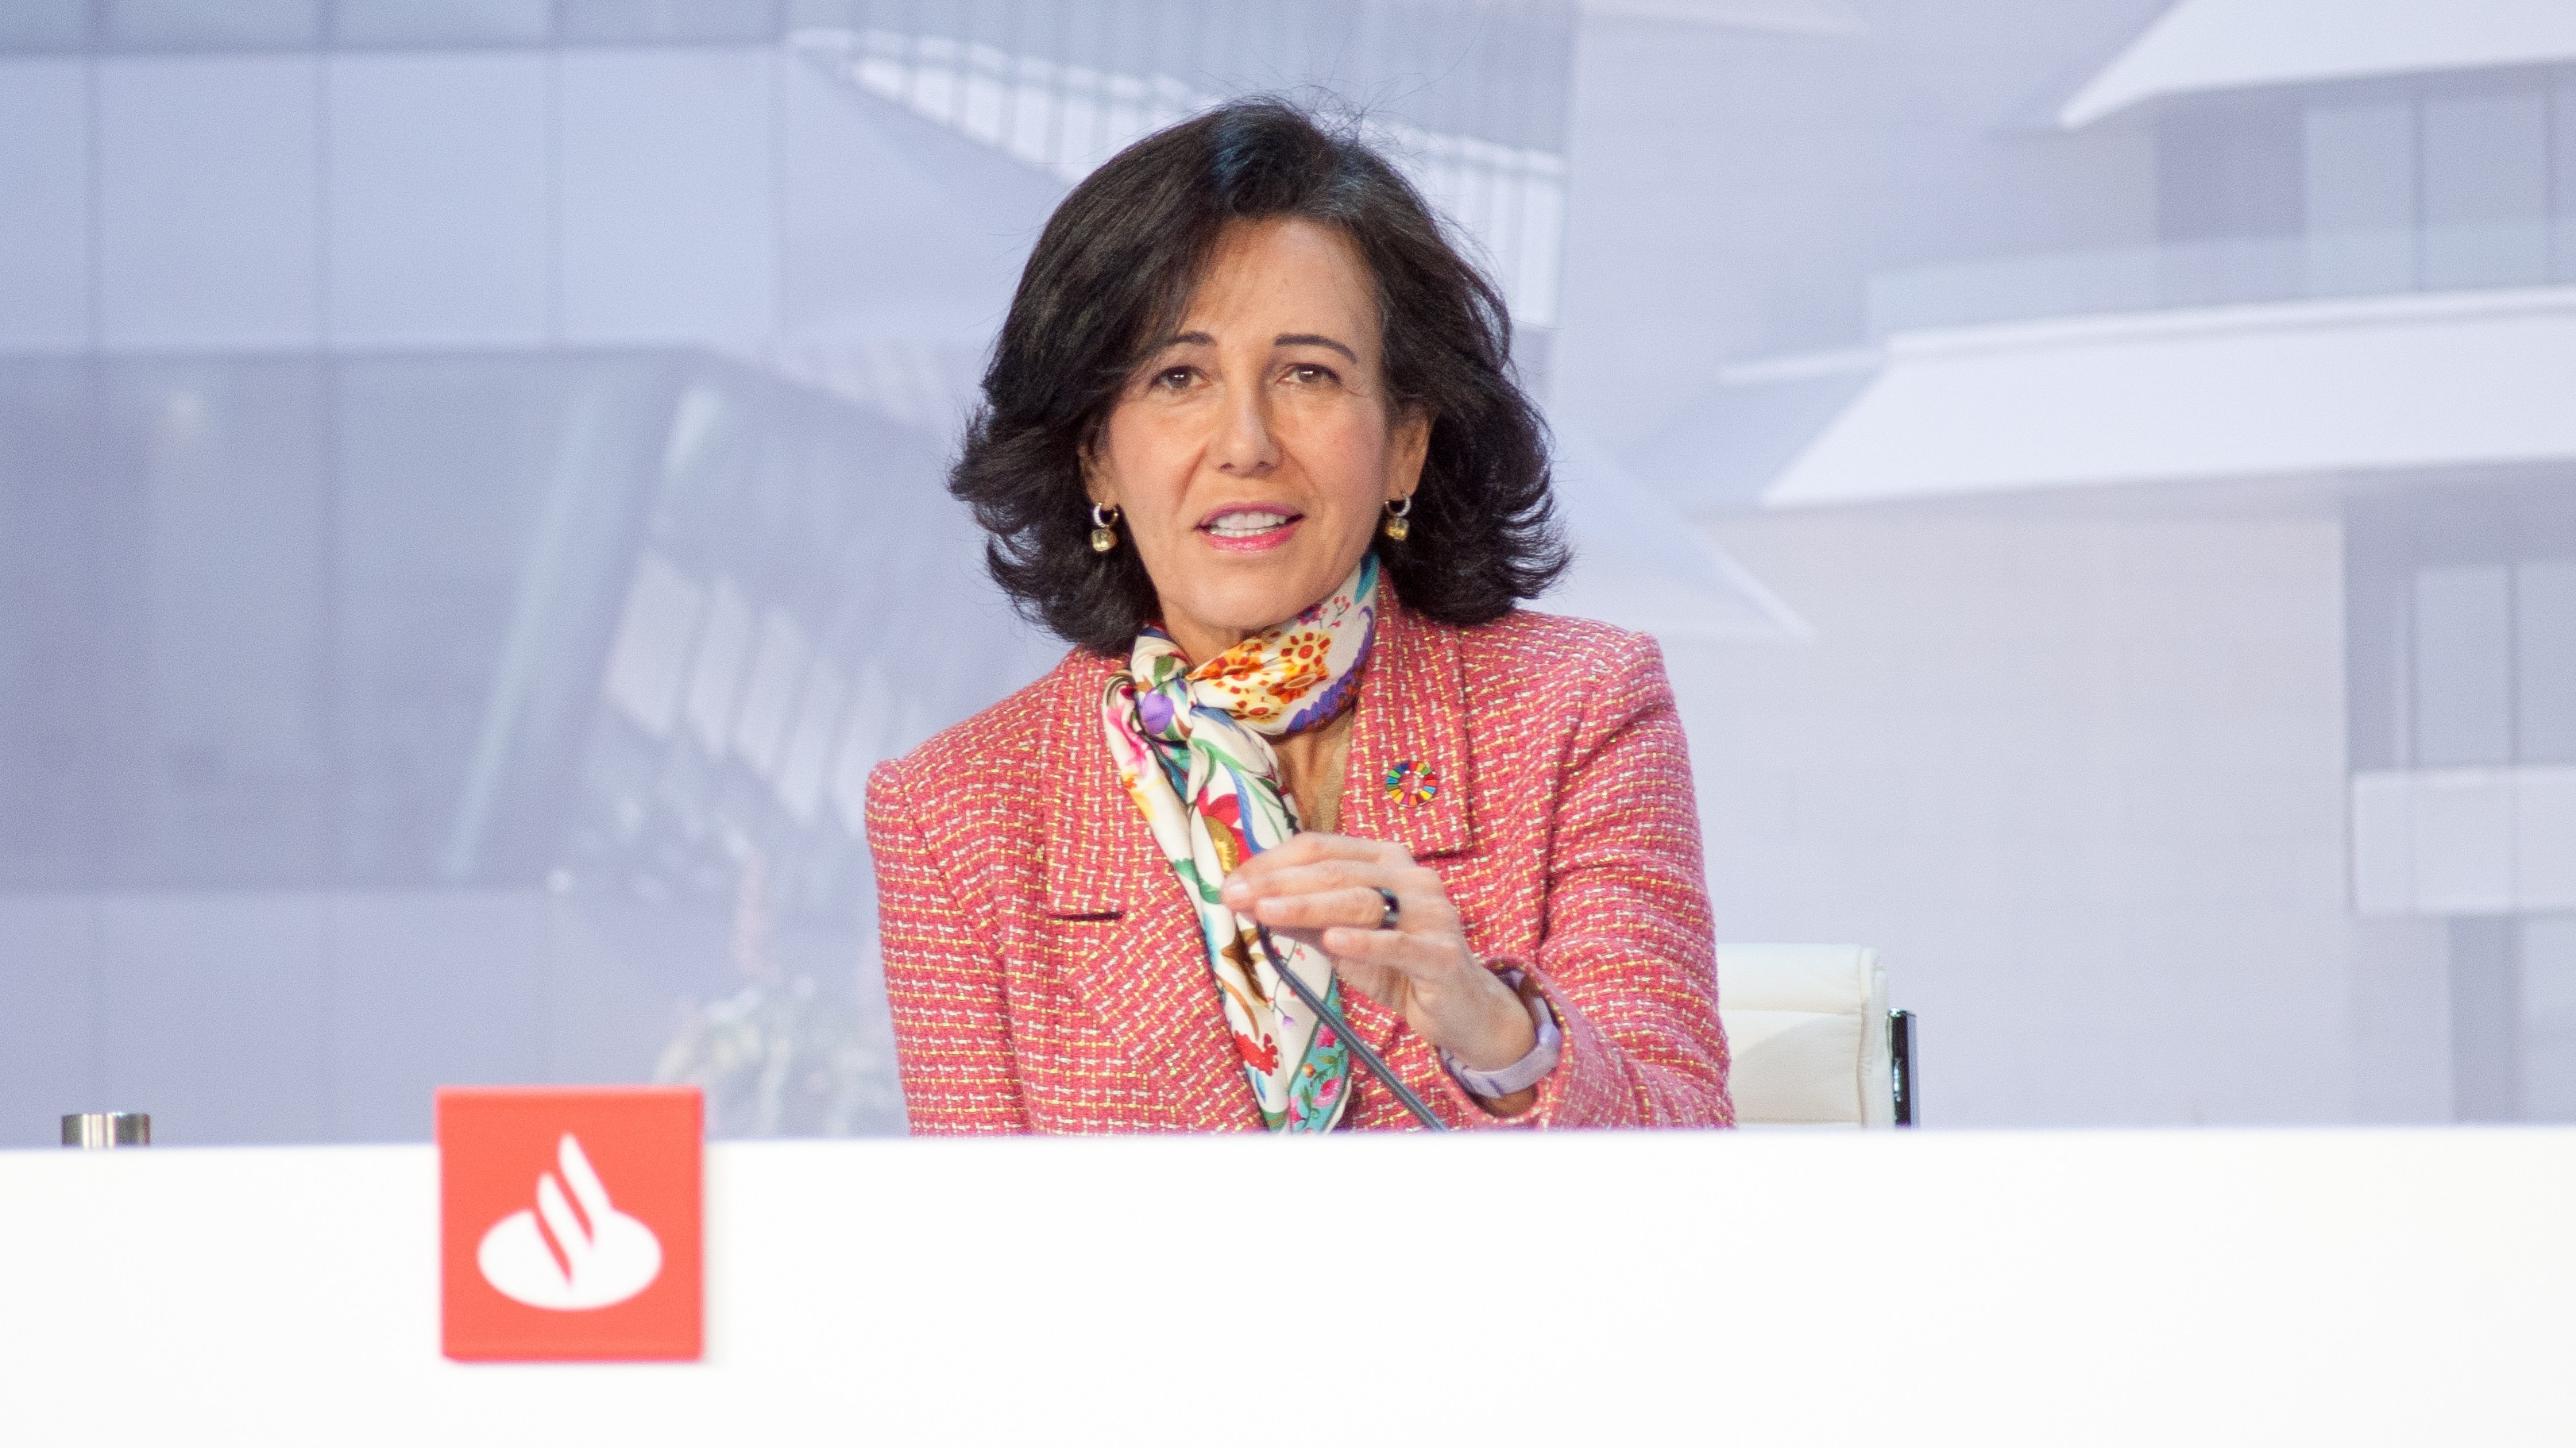 La presidenta de Banco Santander, Ana Botín,